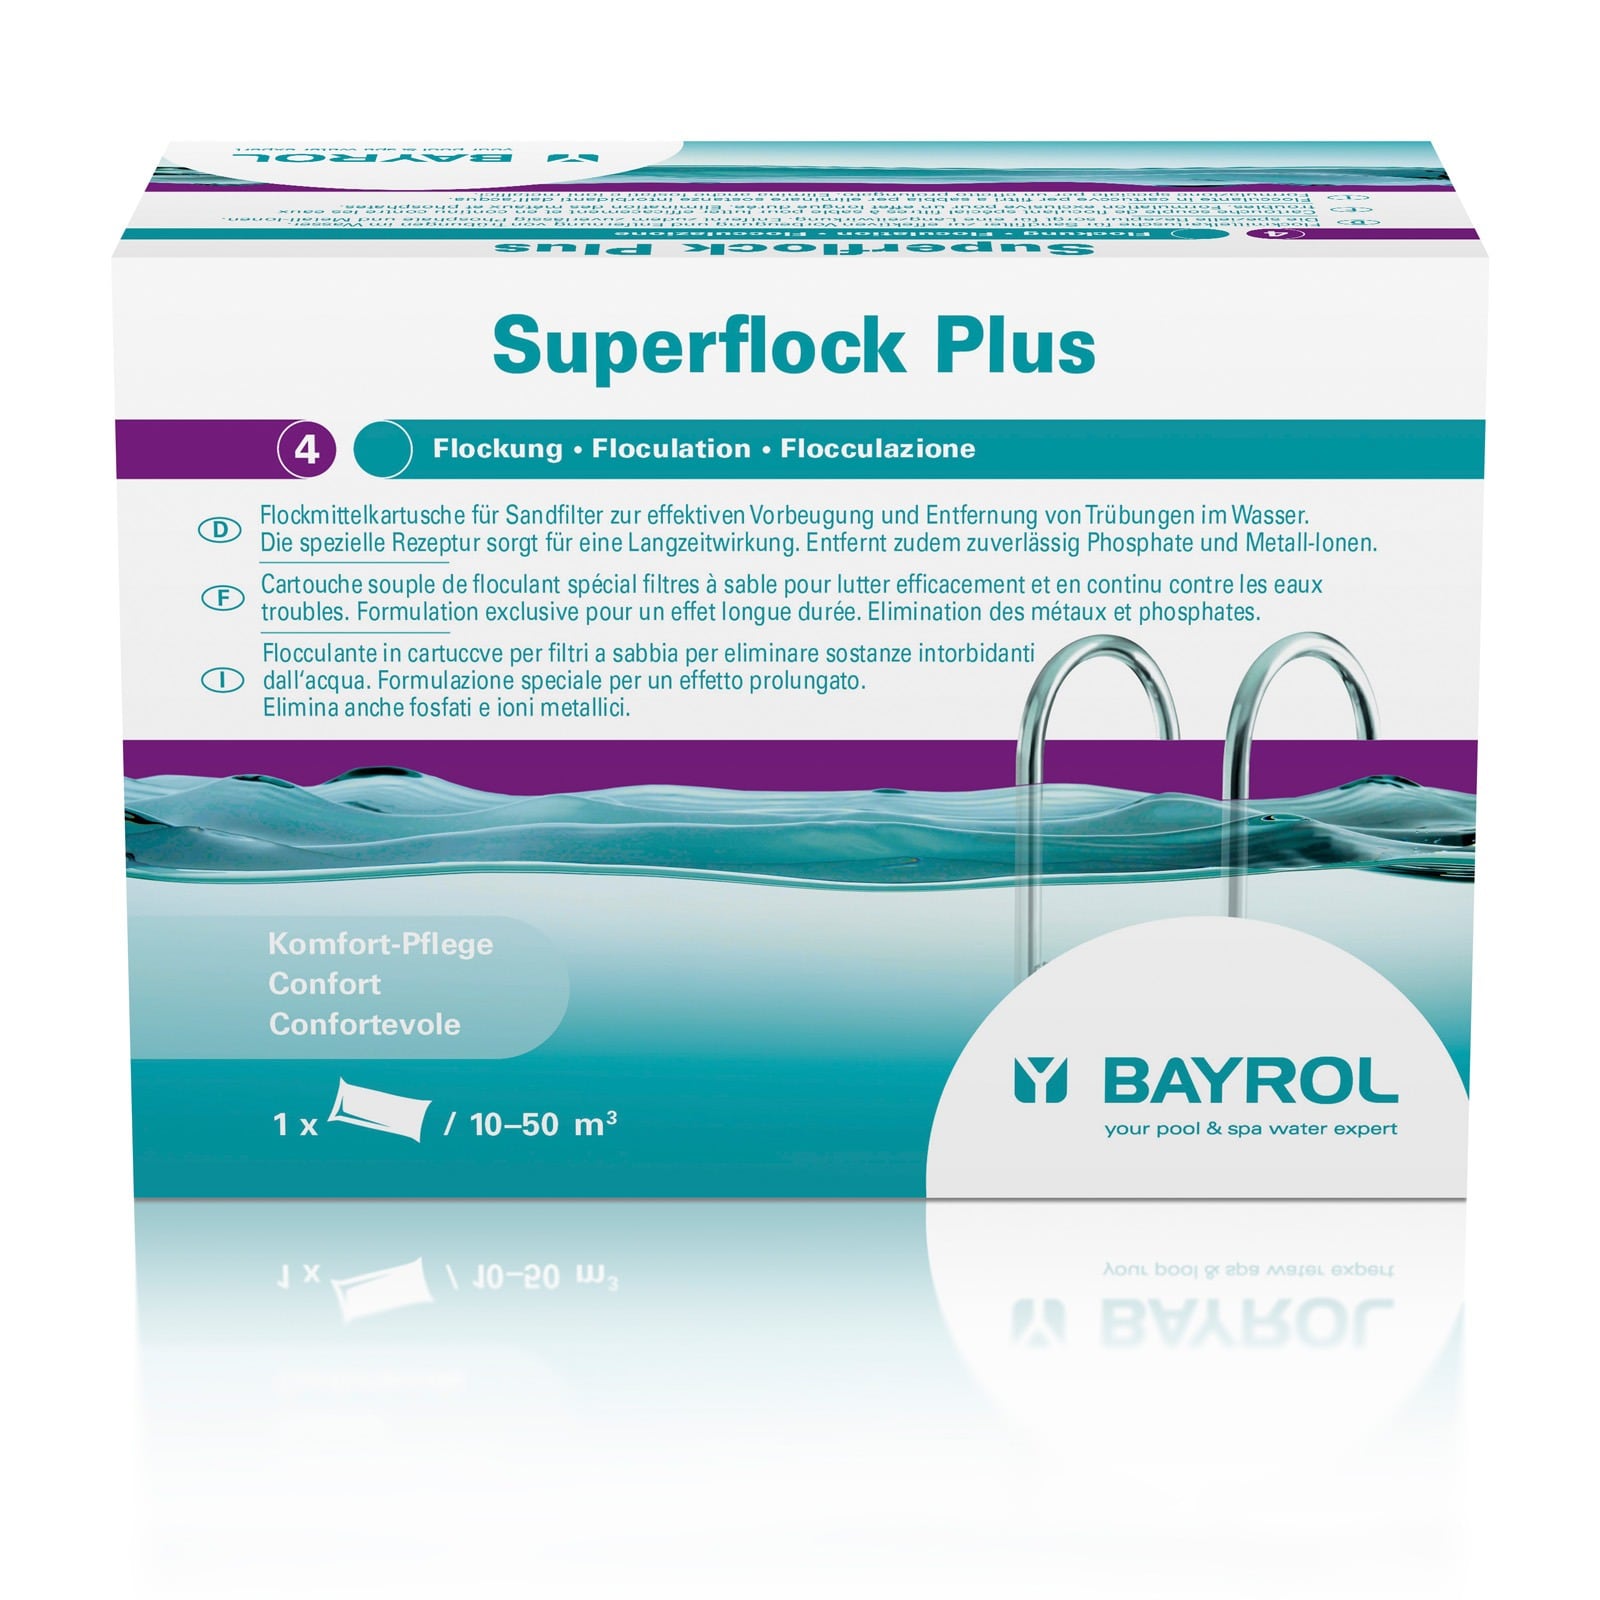 Superflock Plus, Bayrol